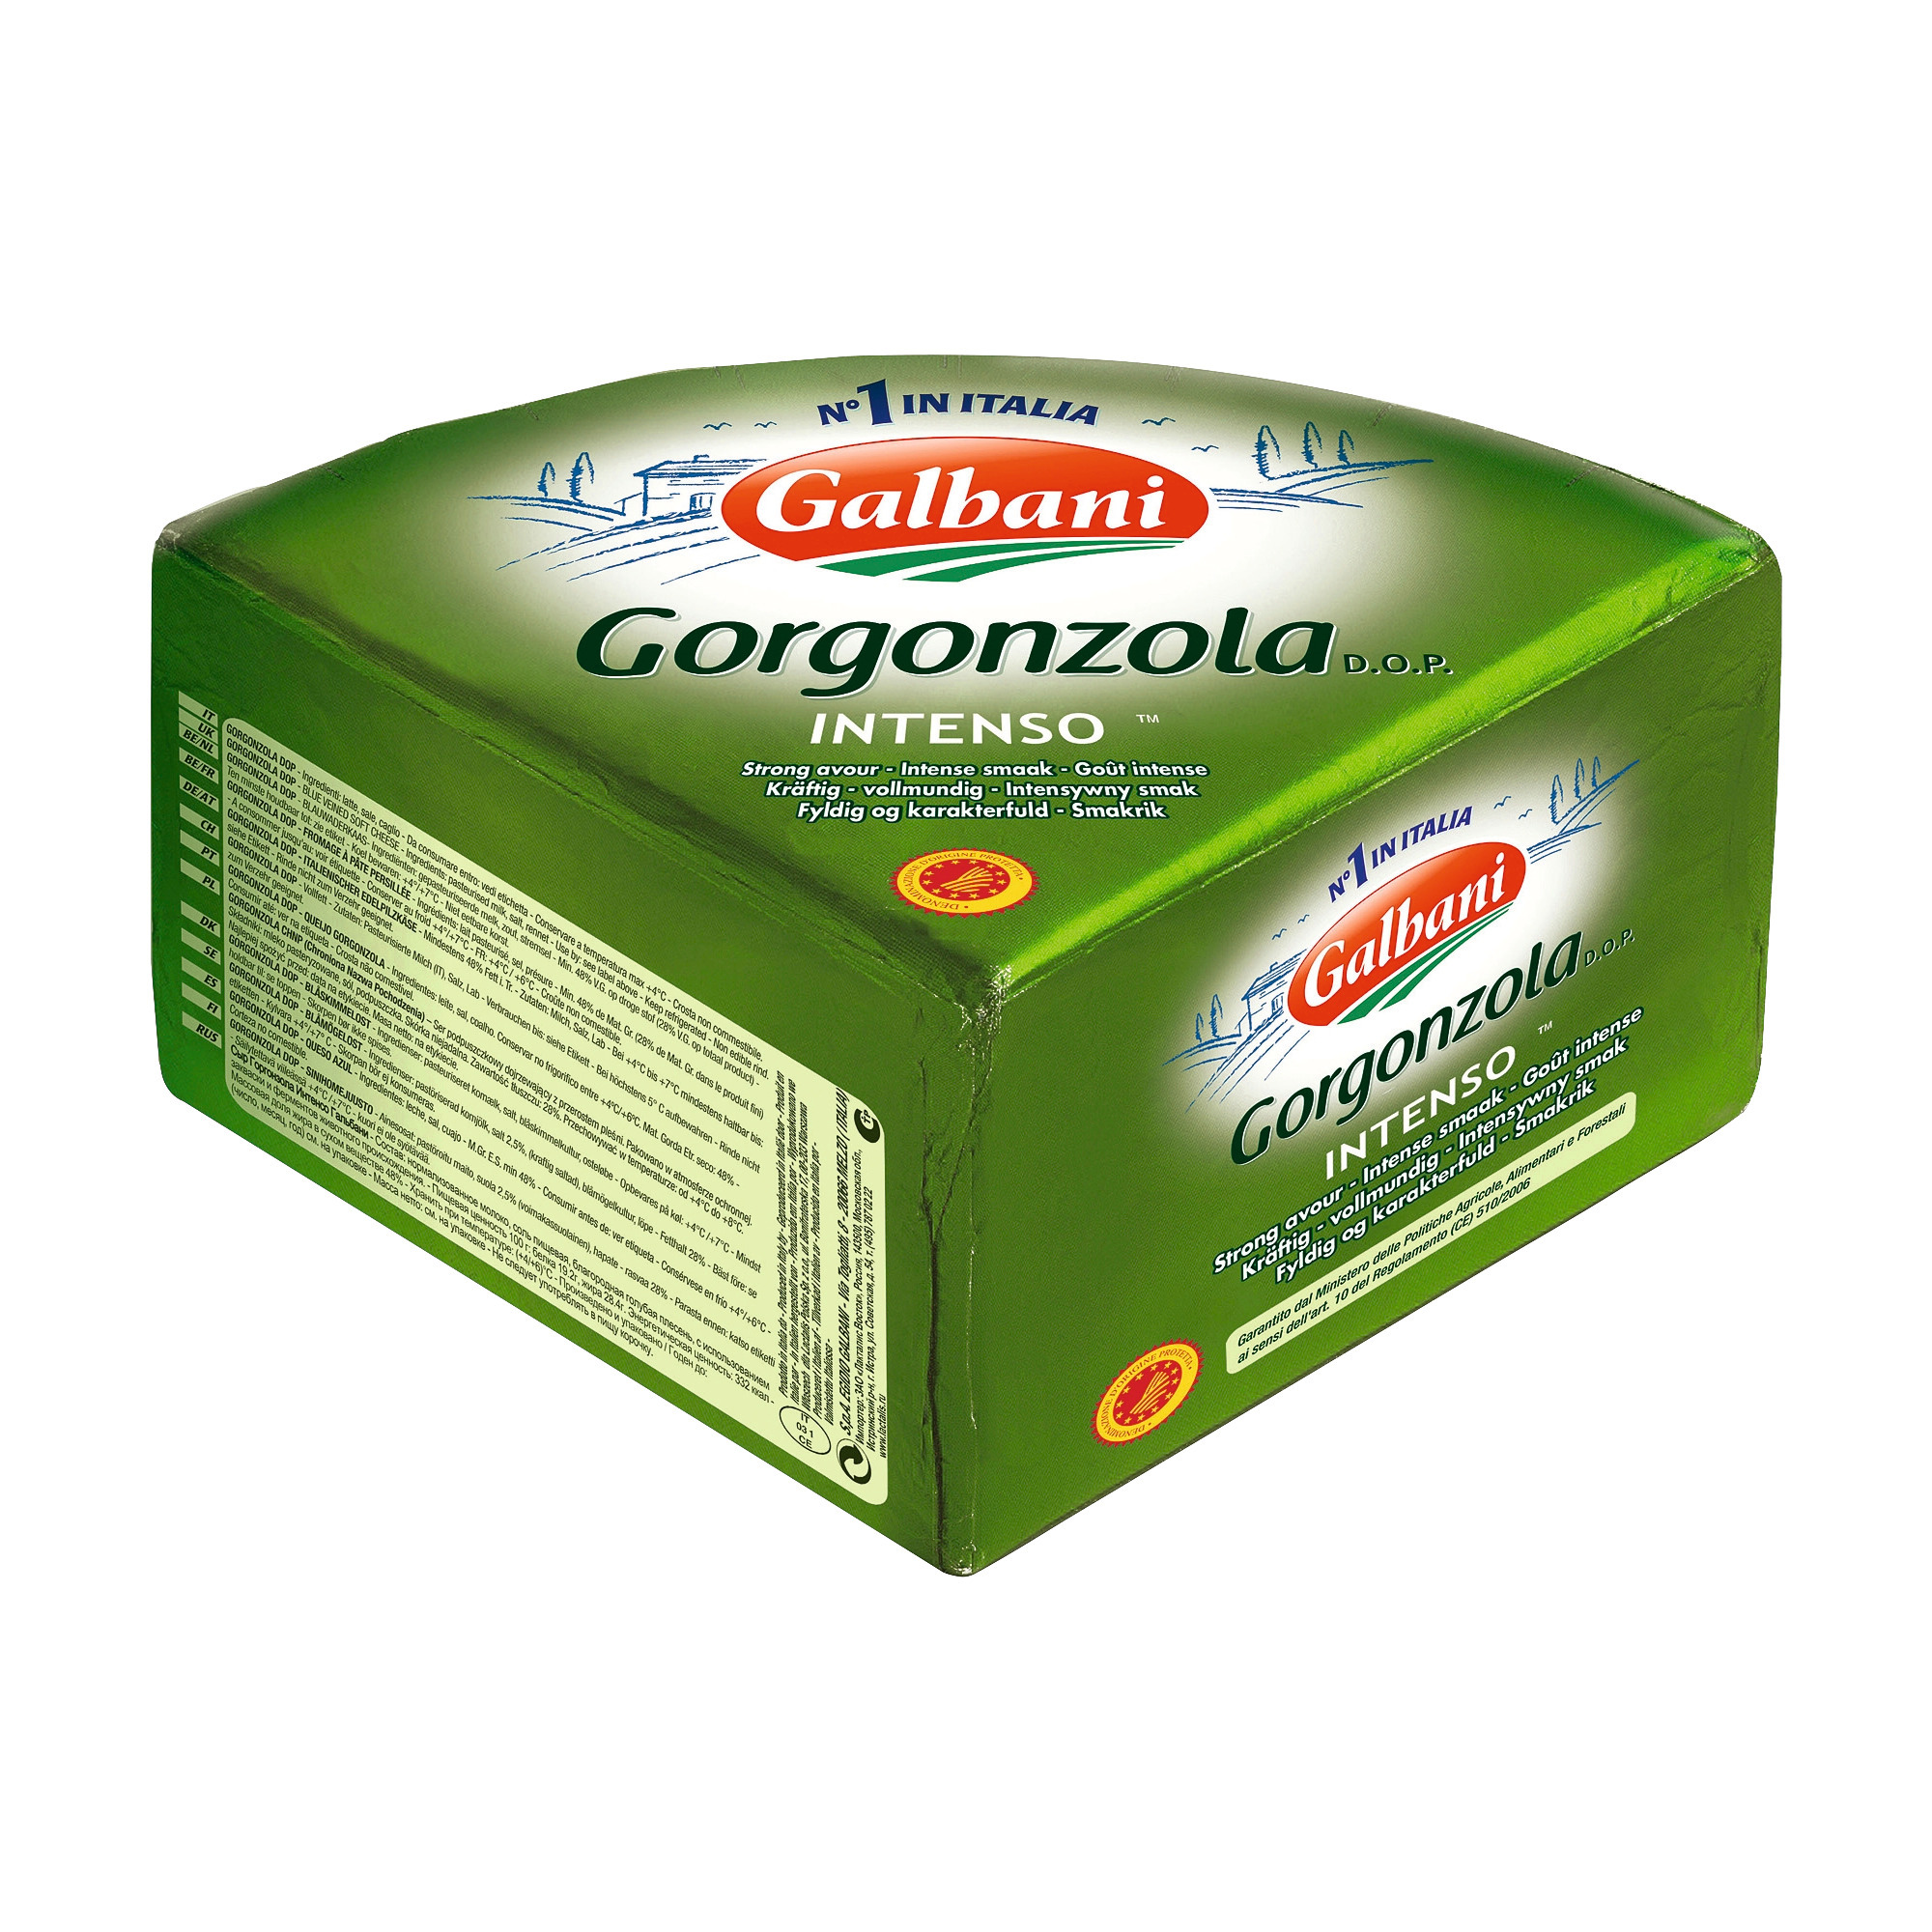 Galbani Gorgonzola cca. 1,5kg Intenso